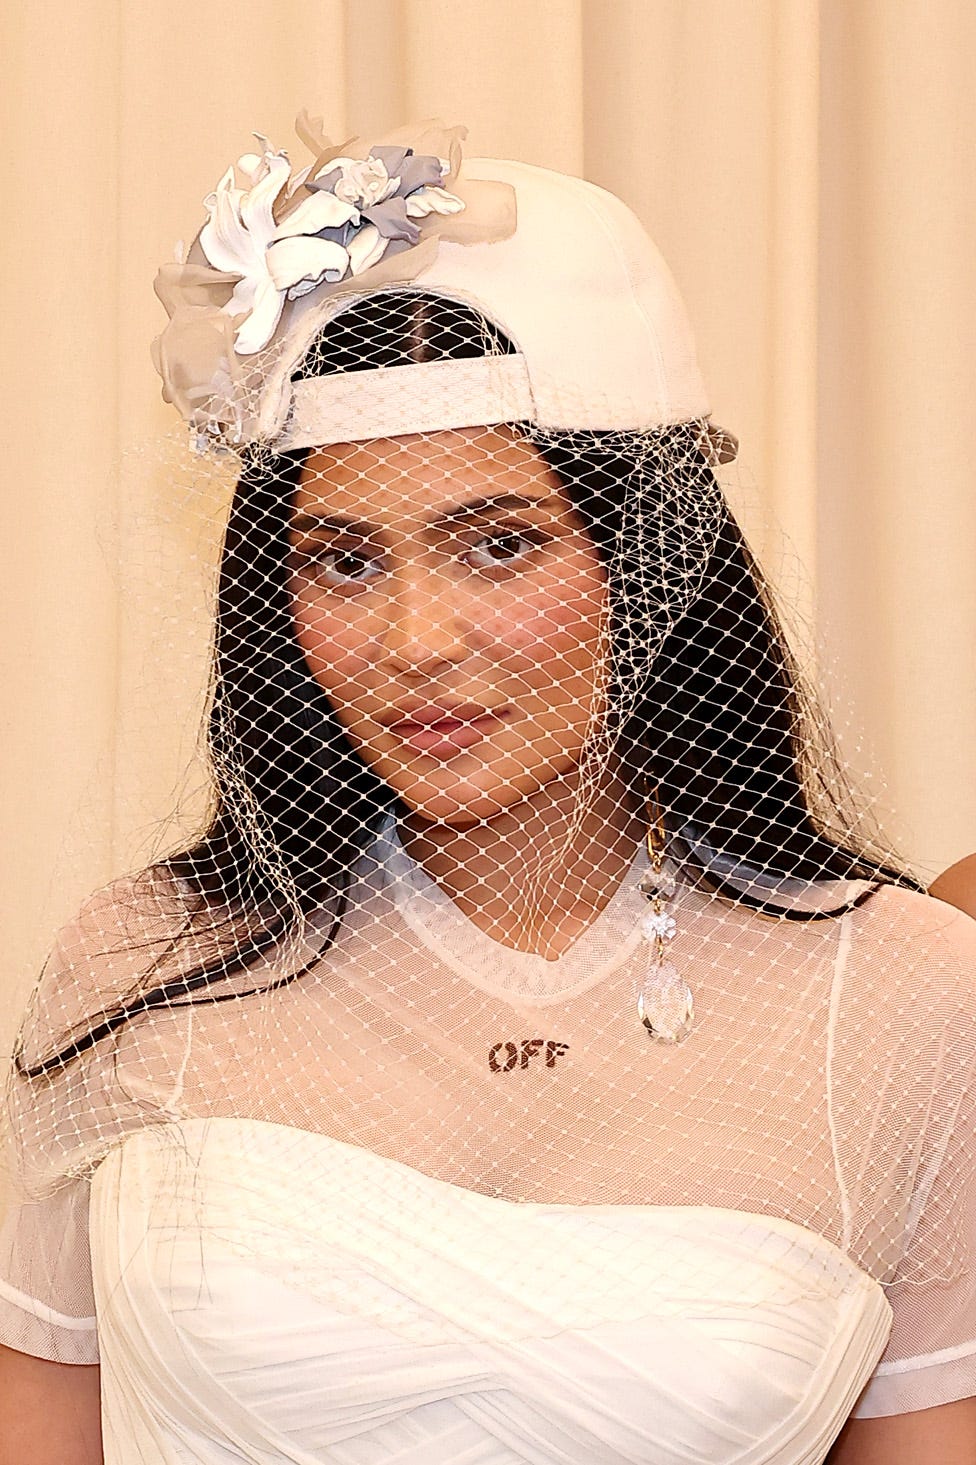 Kylie Jenner Wears Bridal Off White Dress At Met Gala 2022 